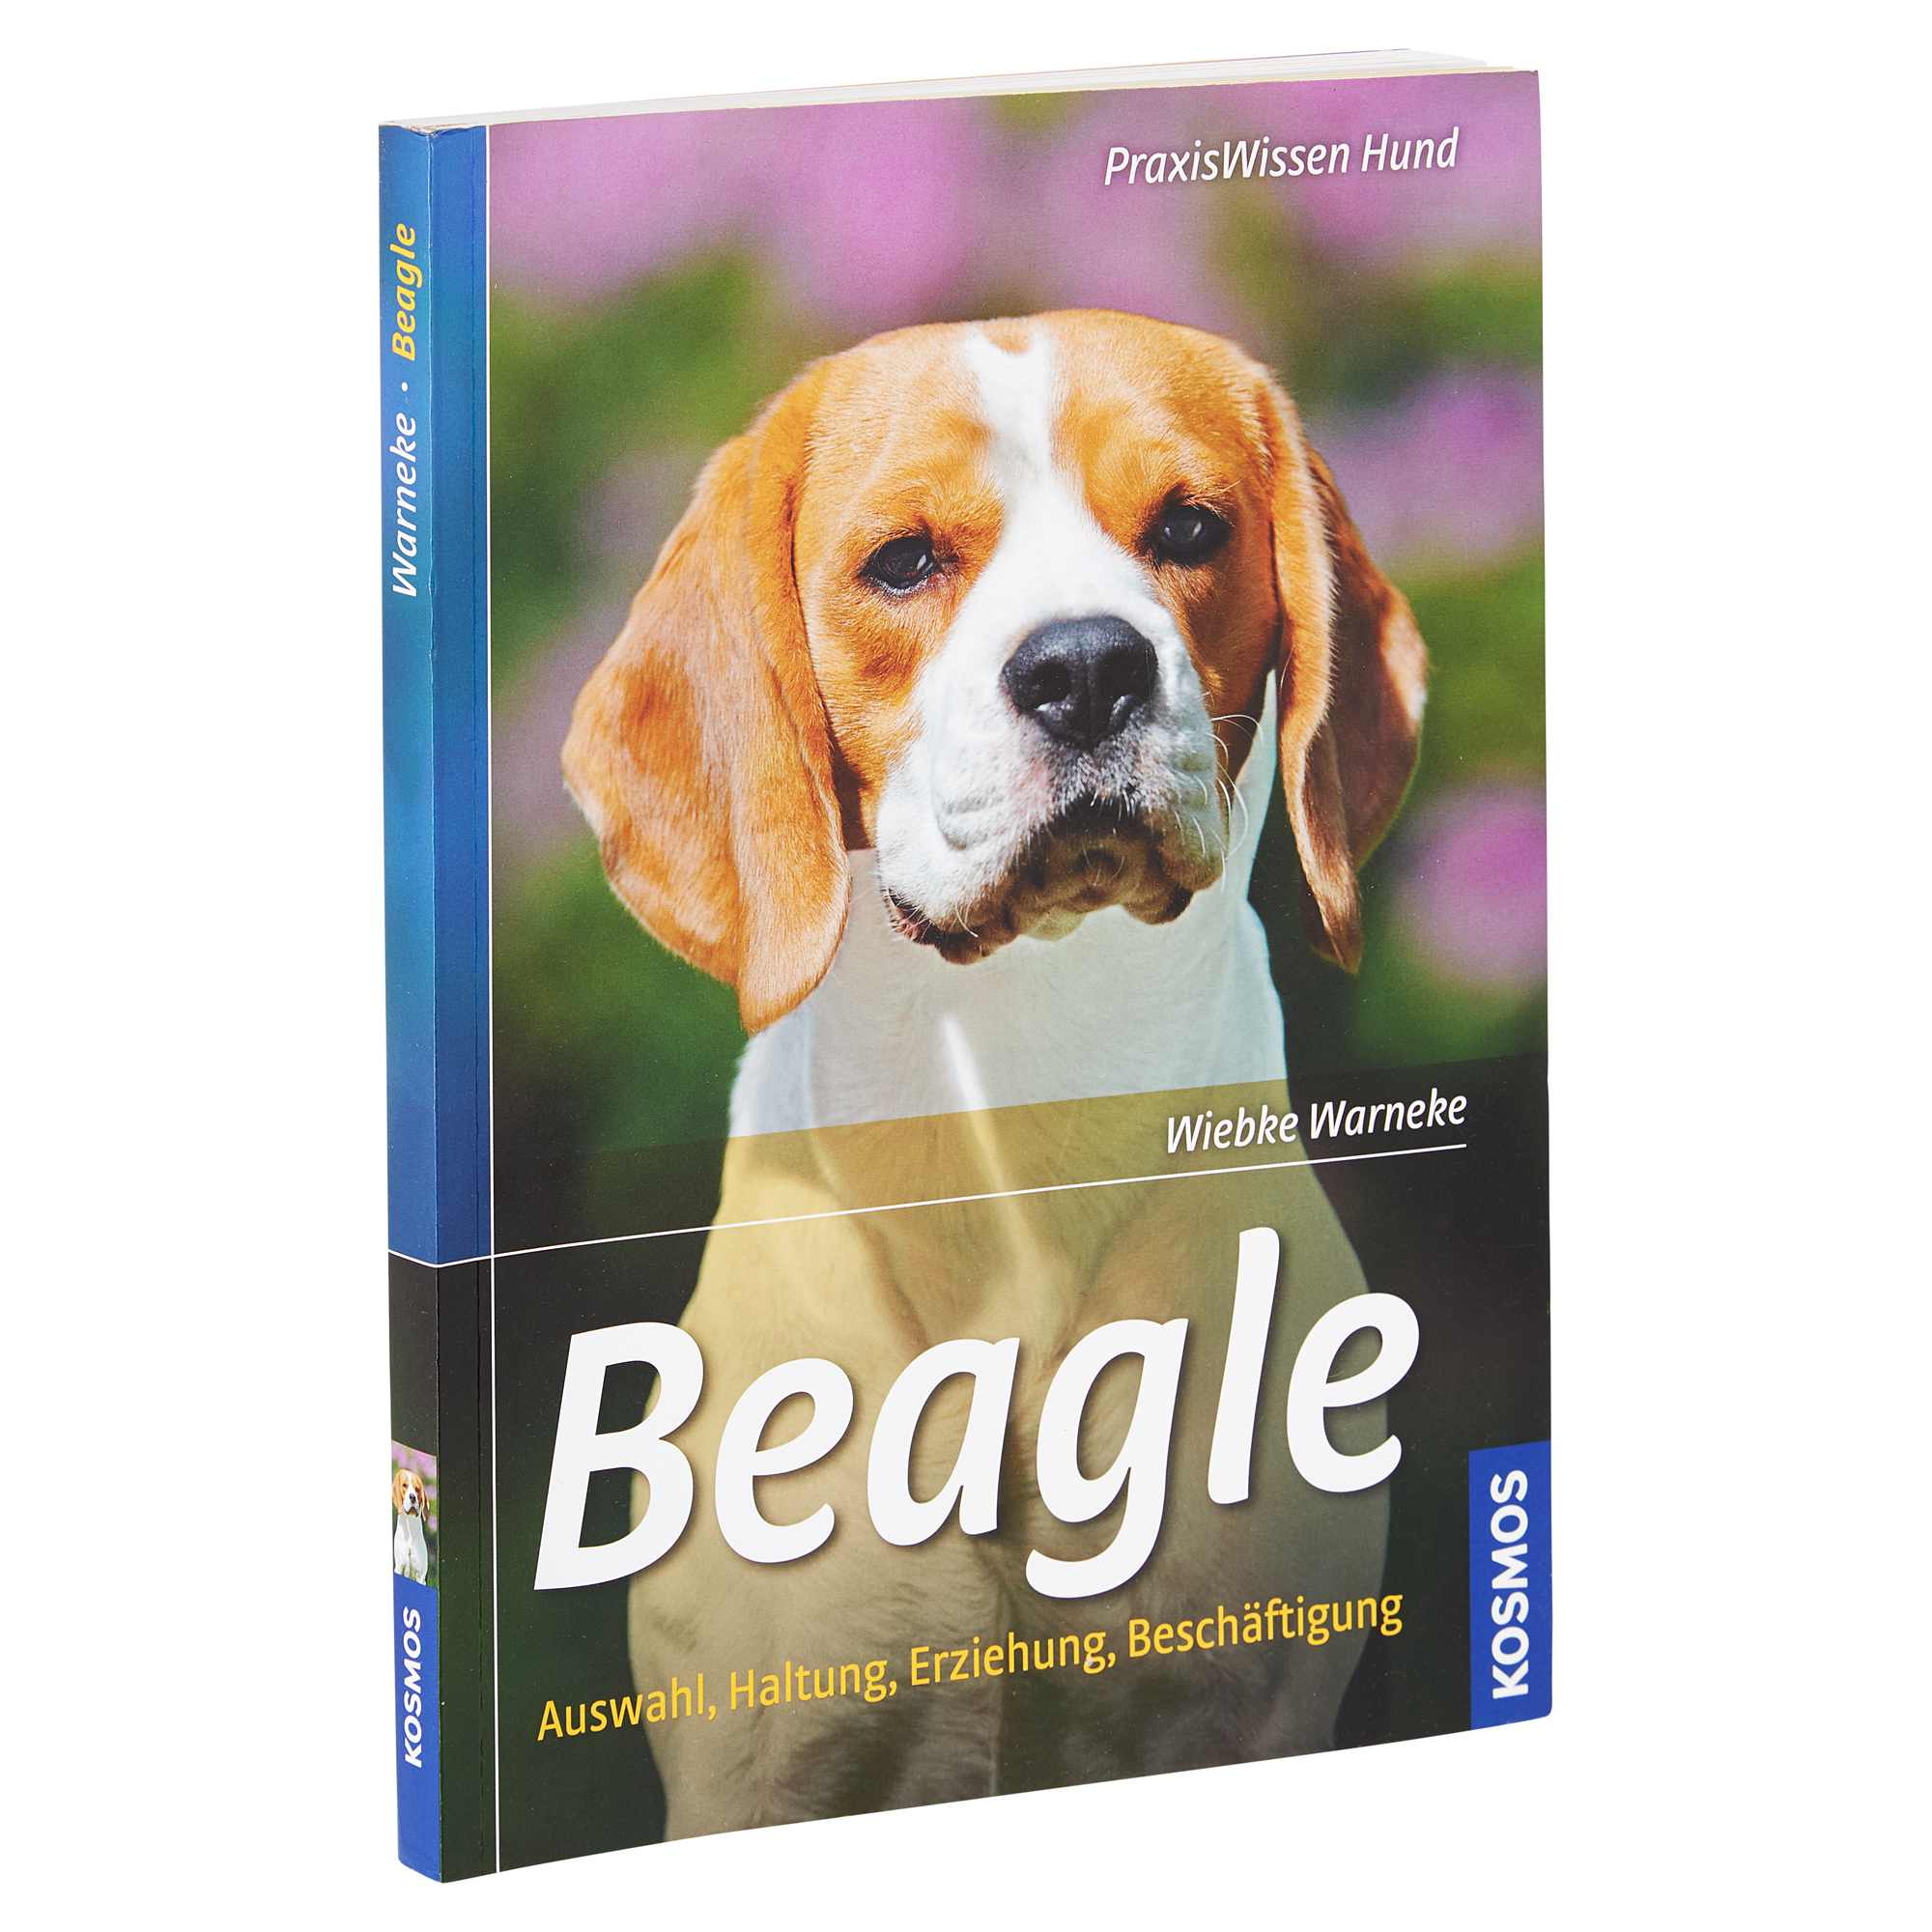 Kosmos-Tierratgeber "Beagle: Auswahl, Haltung, Erziehung, Beschäftigung" PB 128 S. + product picture